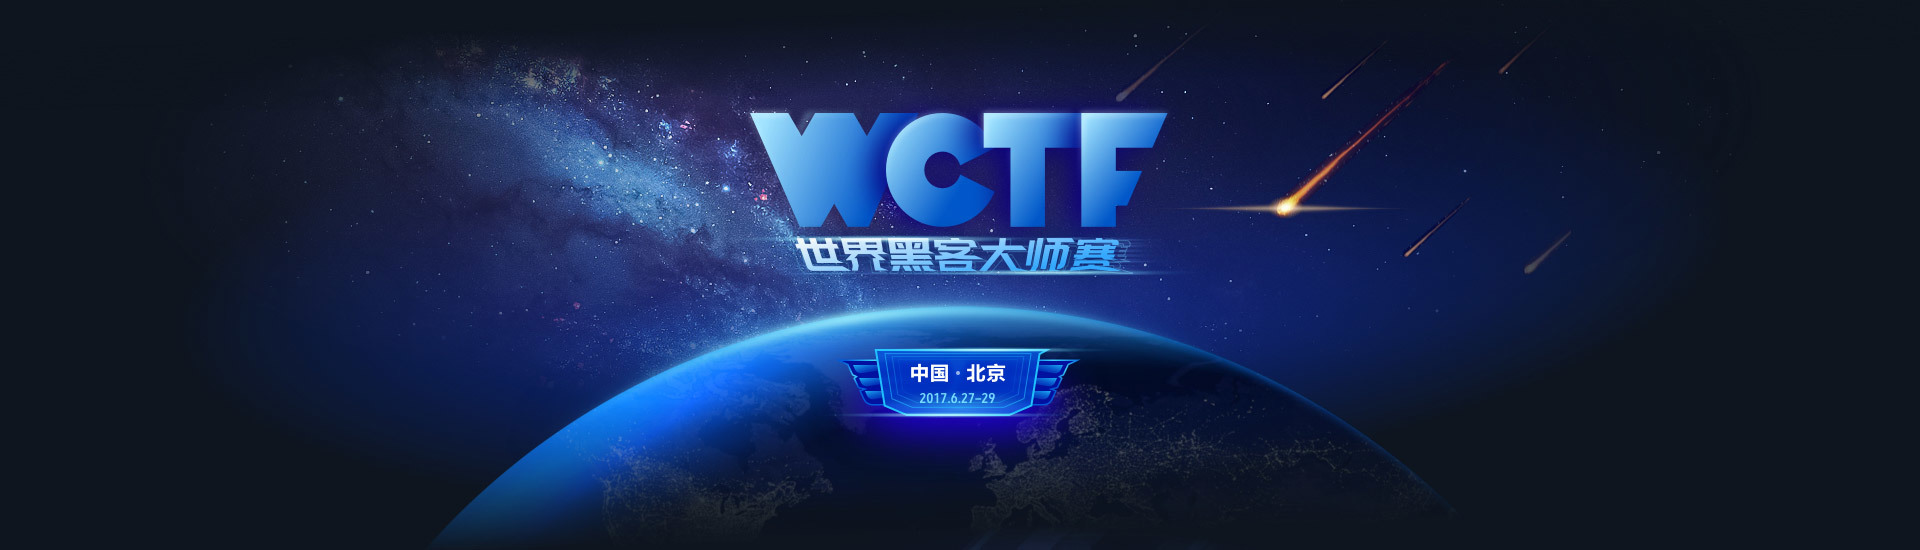 WCTF 2017 世界黑客大师赛